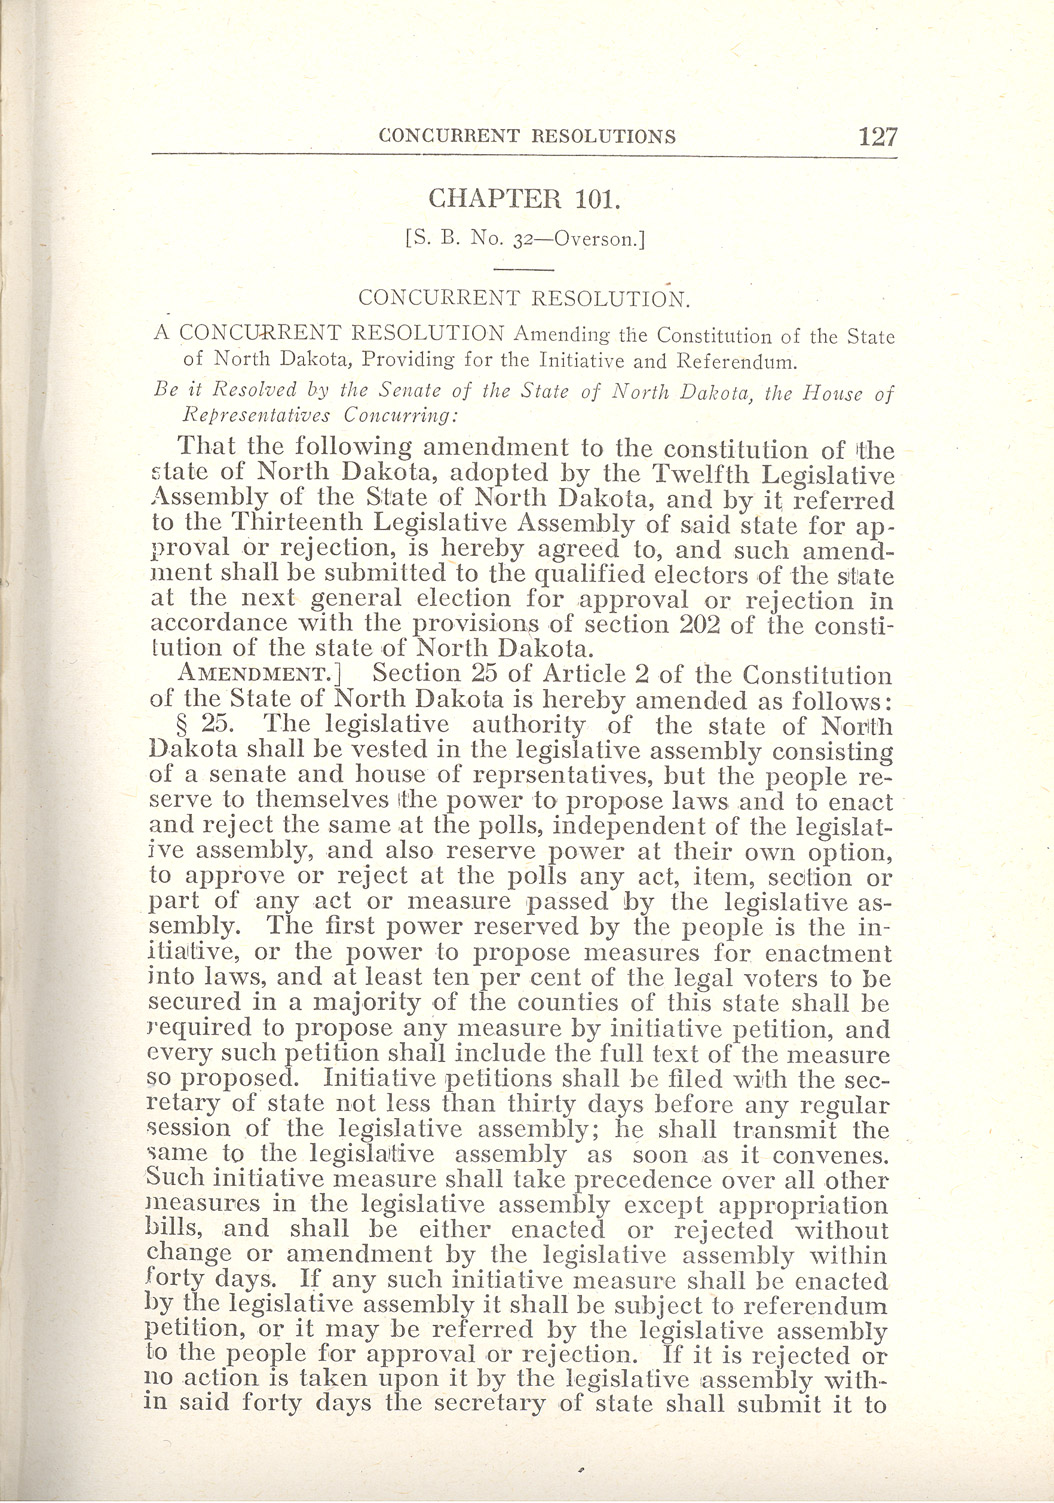 Initiative and referendum 1913 1